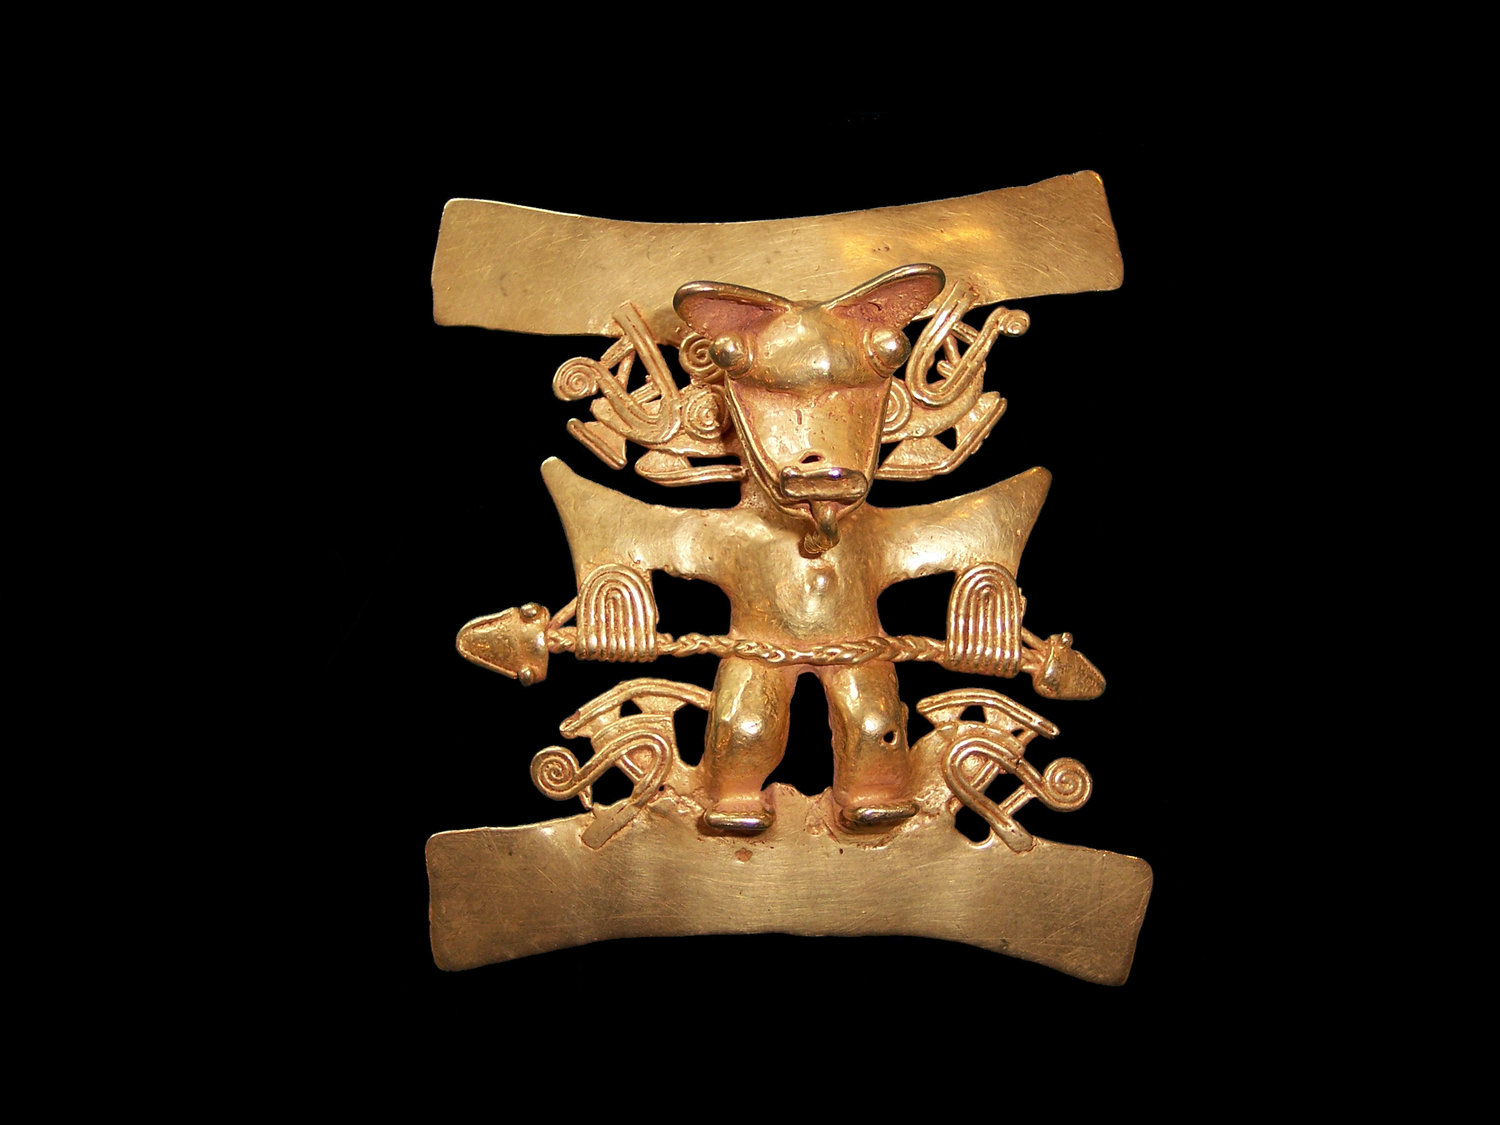 Artifacts mayan gold Ancient Resource: